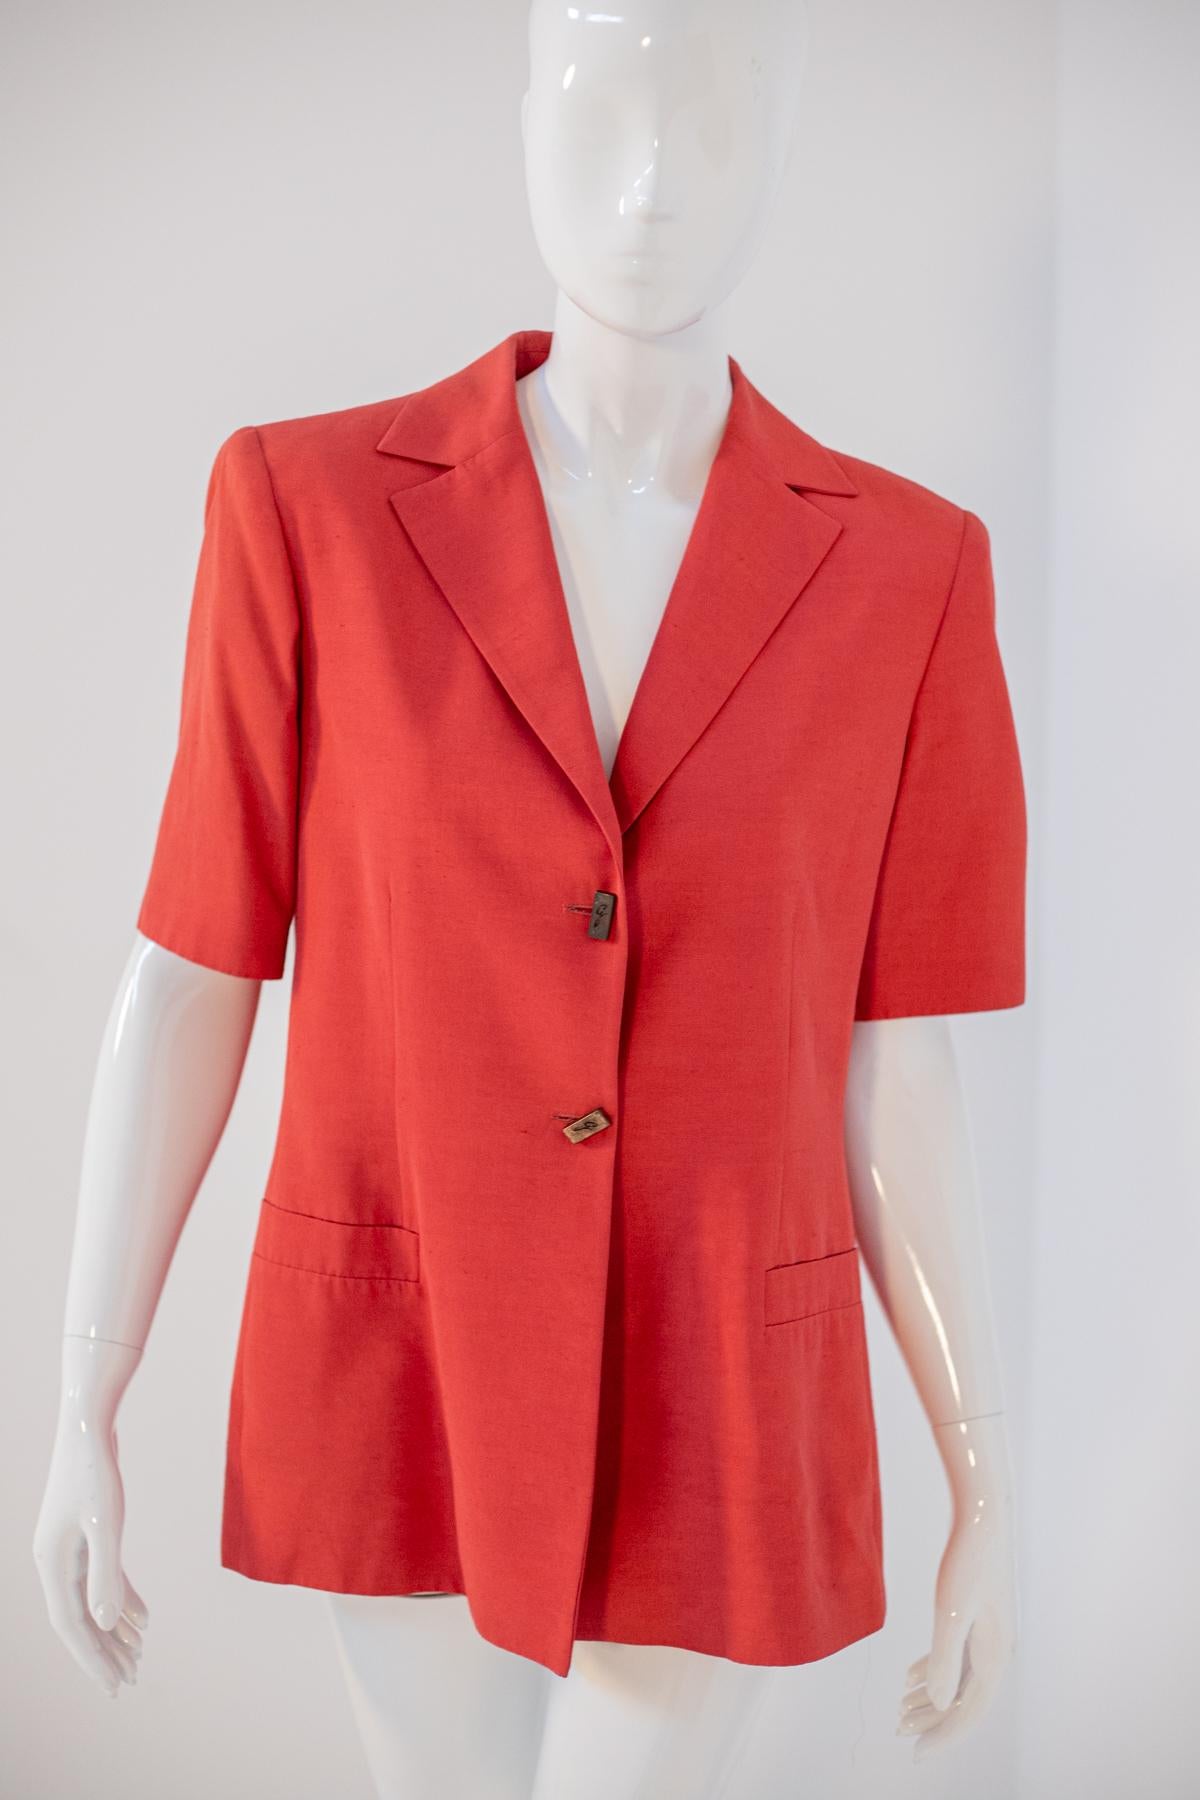 Gattinoni Stylish Vintage Red Blazer For Sale 3